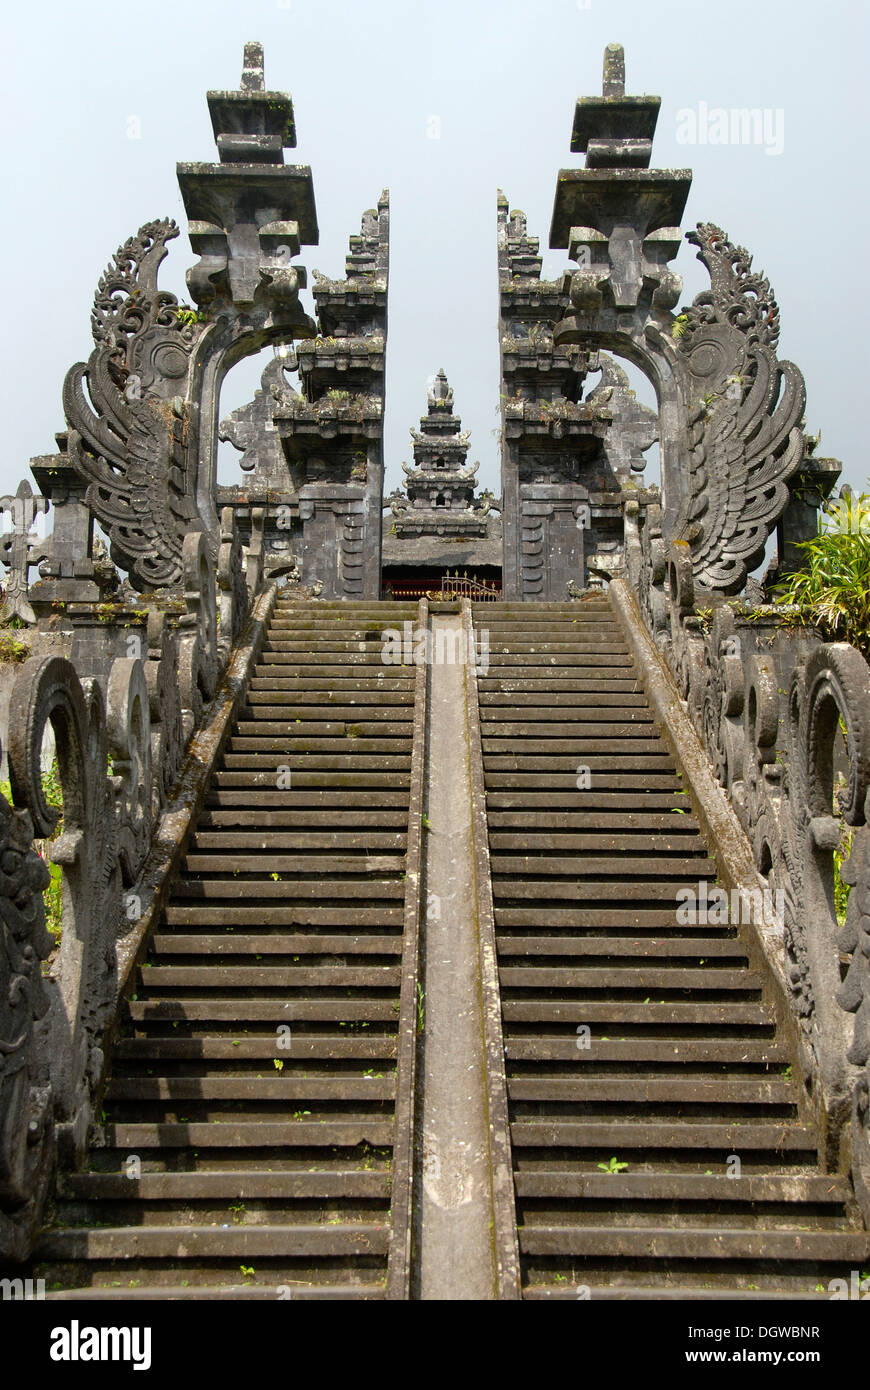 Balinese Hinduism, sanctuary, long stairs, split gate, Candi bentar, mother temple, Pura Besakih temple, Bali, Indonesia Stock Photo